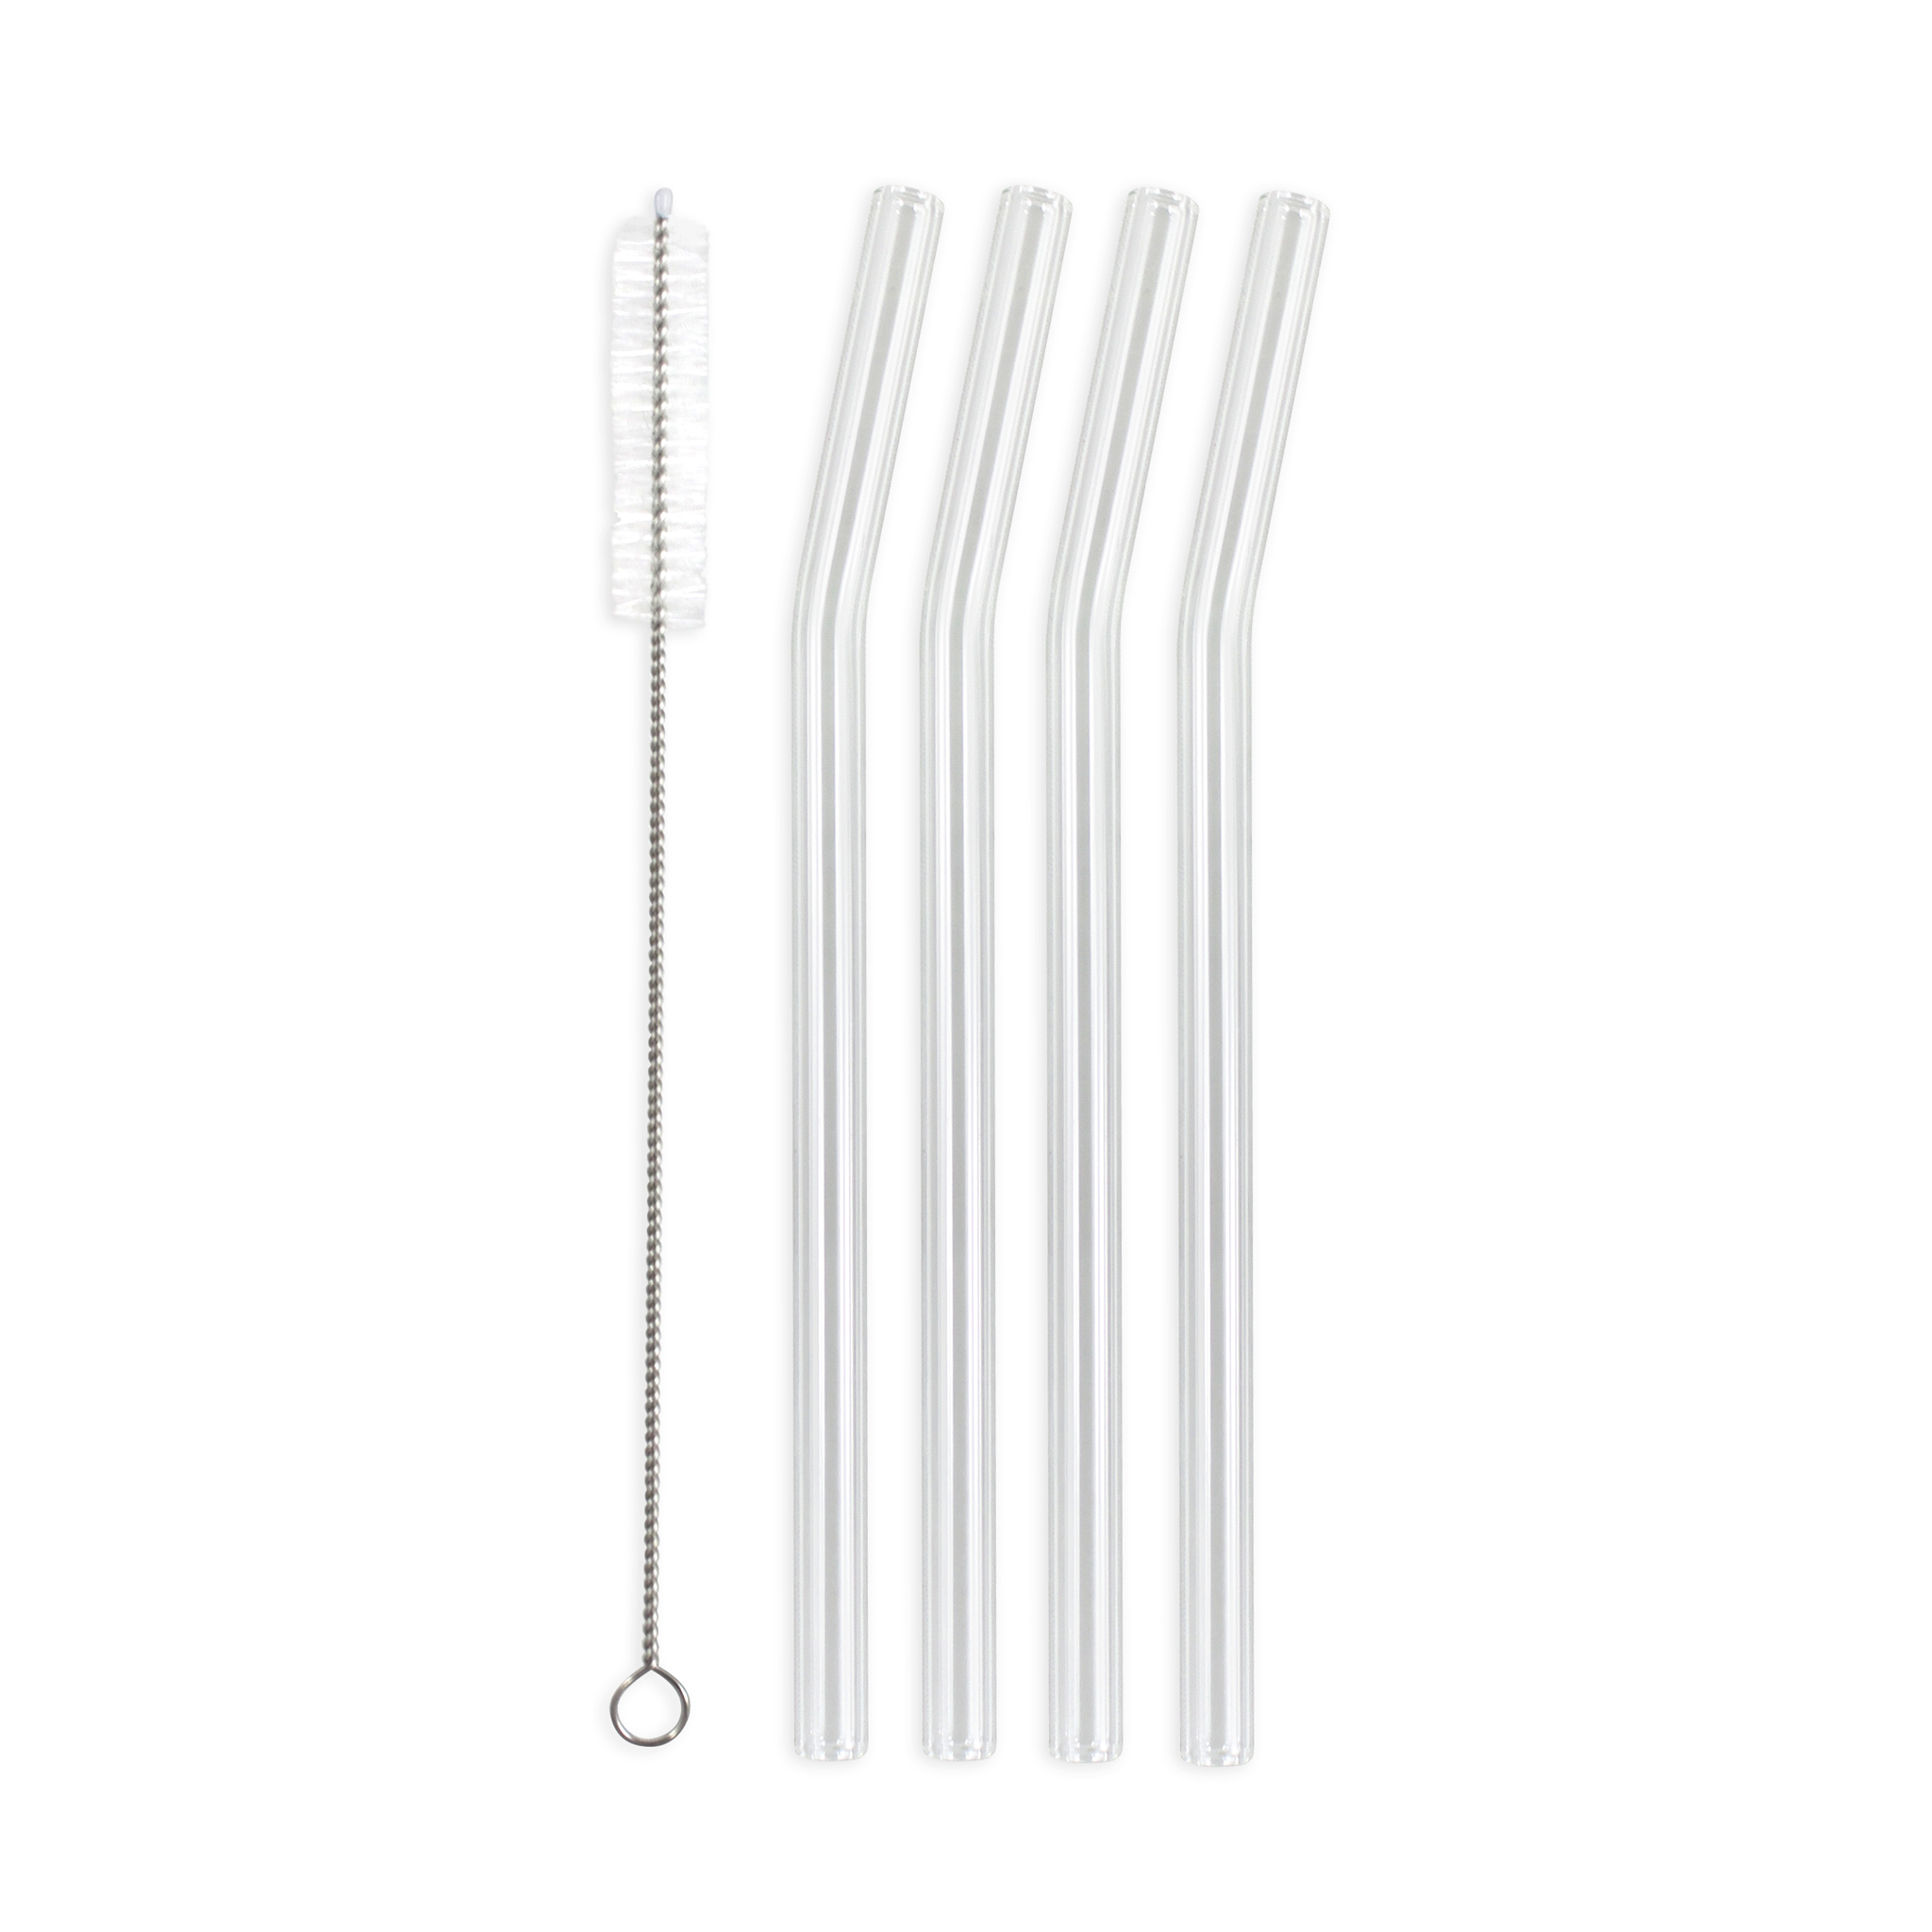 Family Pack - 4 Regular Glass Straws (9.5 mm Diameter) with